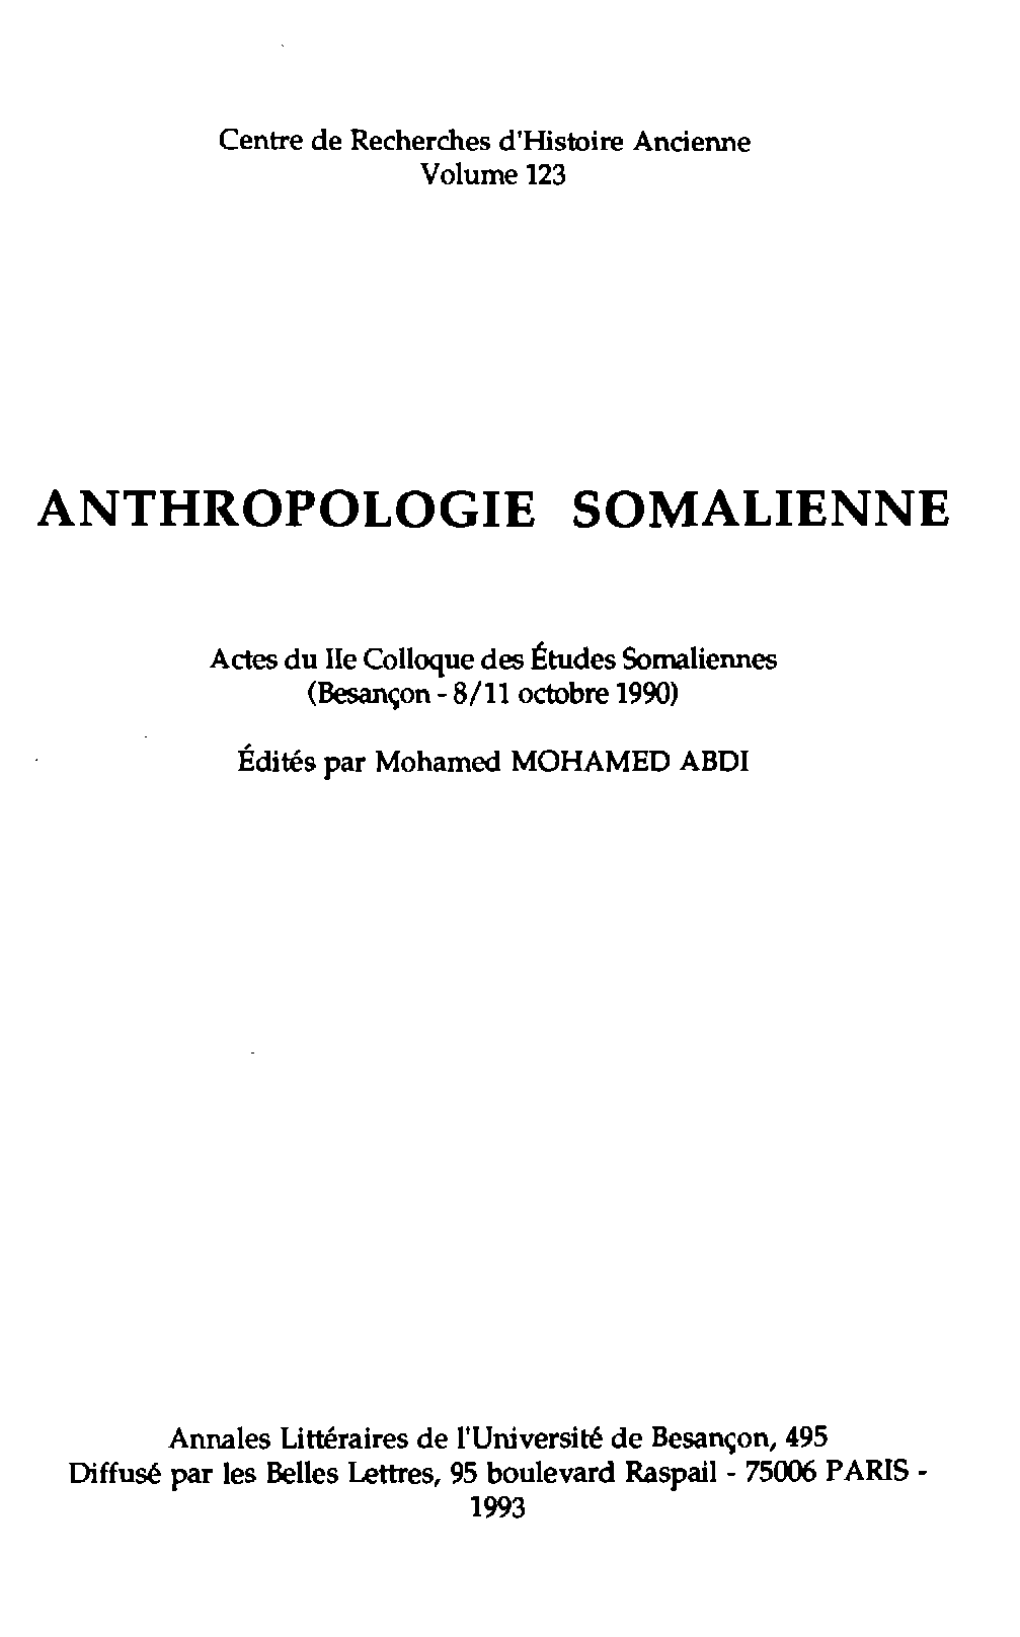 Anthropologie Somalienne